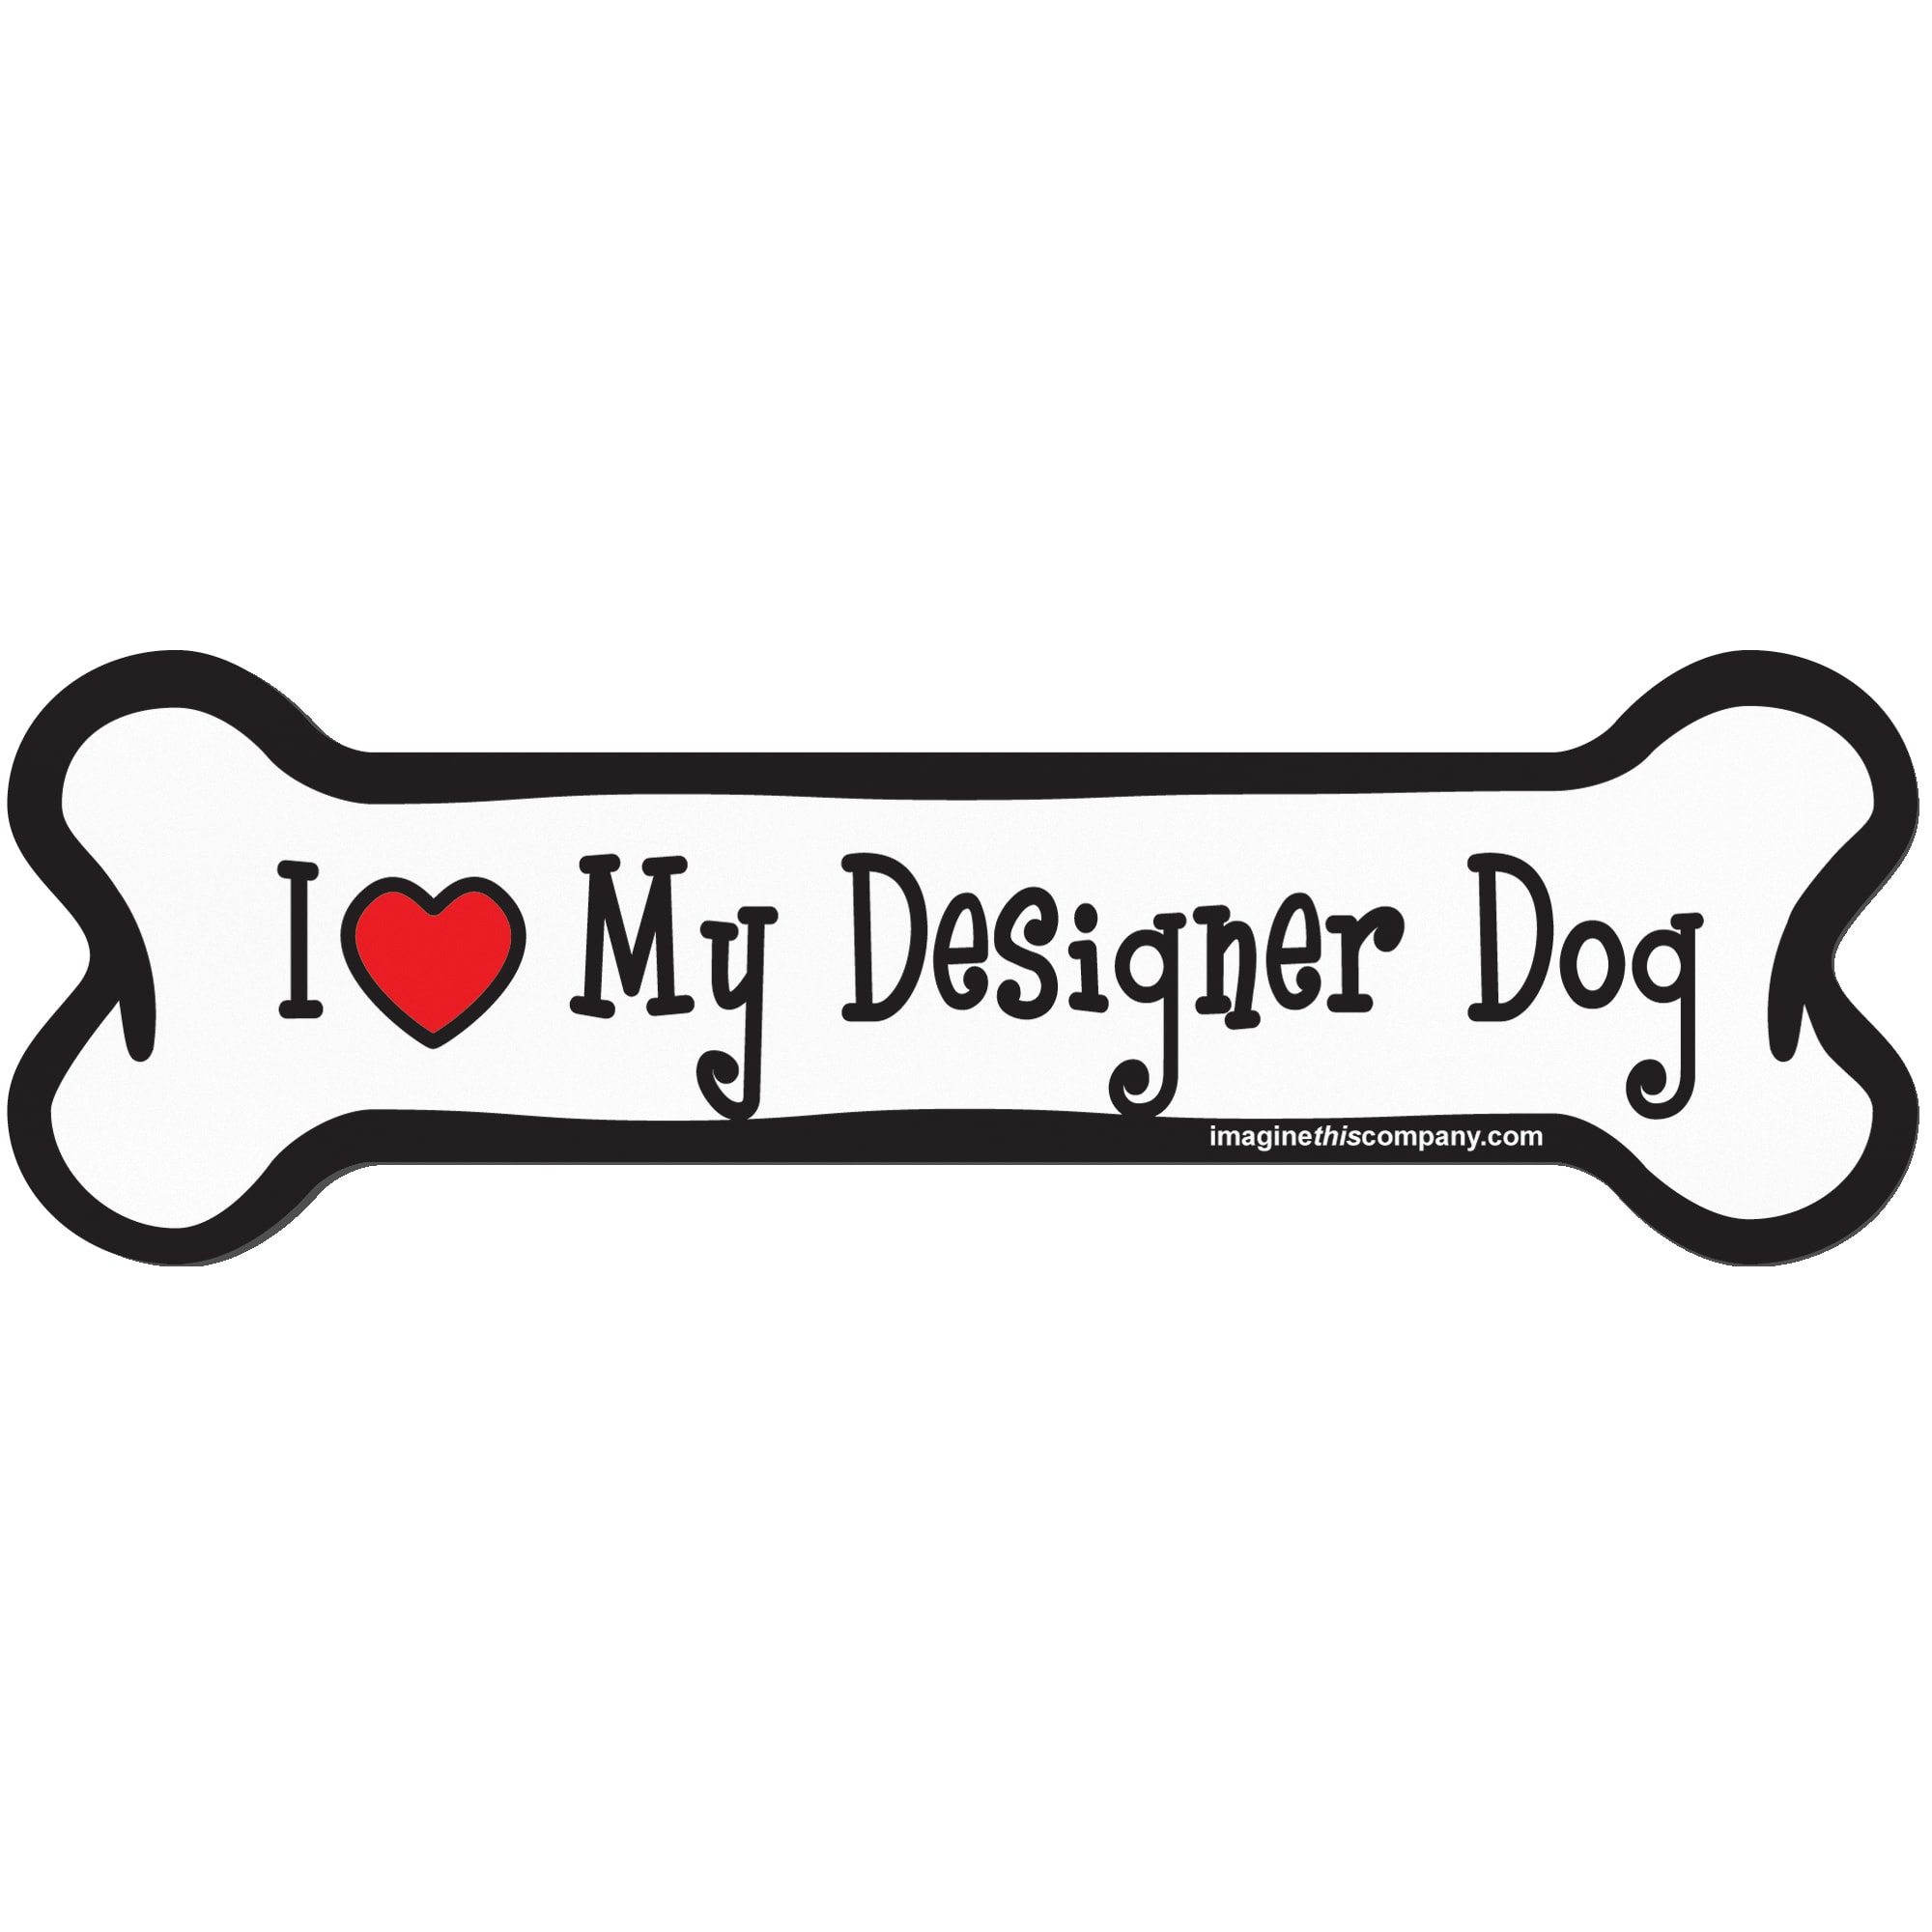 I LOVE MY COCKER SPANIELDogs Doggy PuppyCar Automobile Dog Bone Magnet 